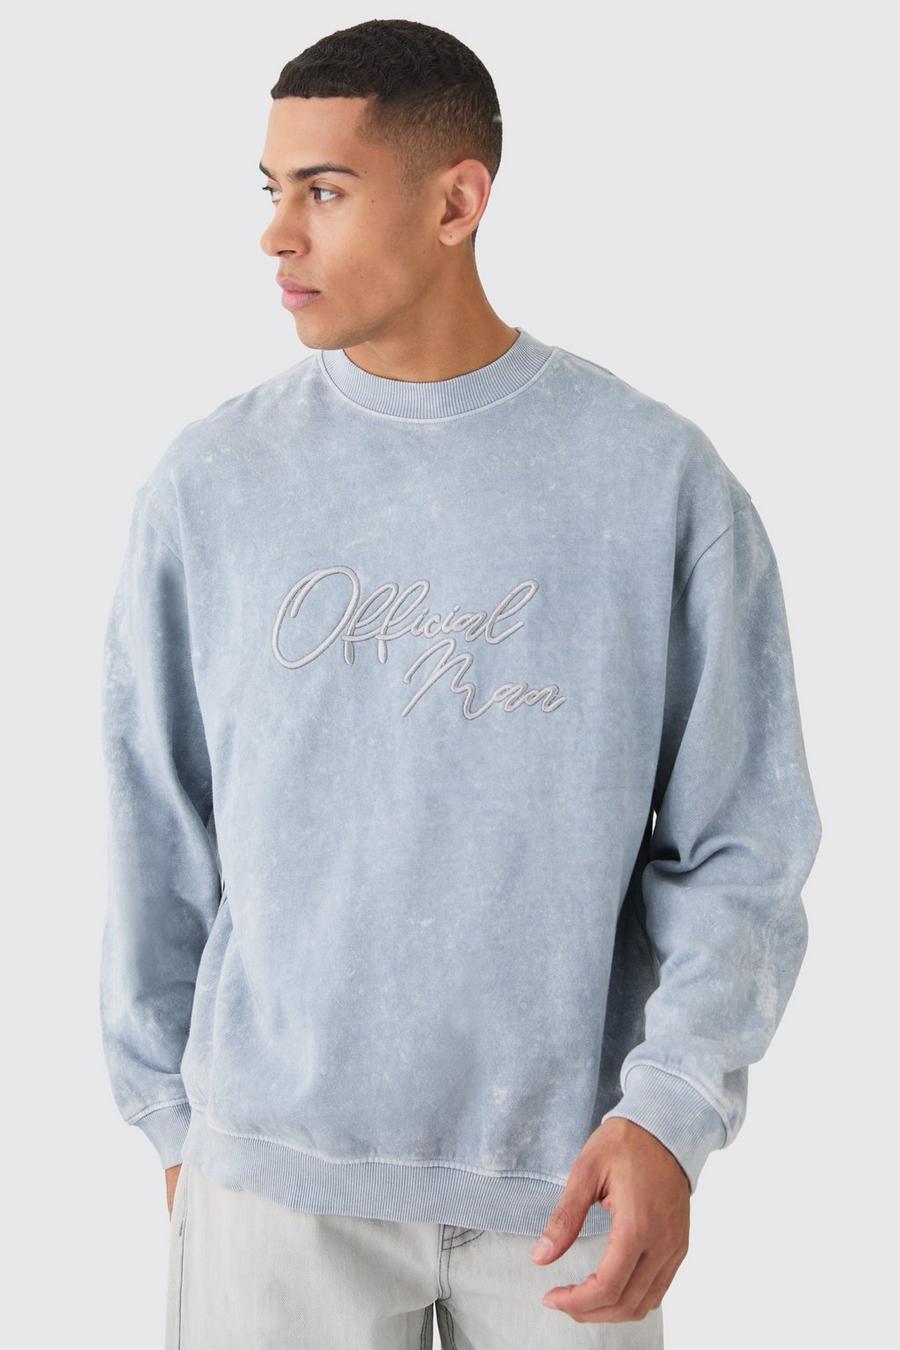 Light STUDIO Oversized Extended Neck Acid Wash Embroidered Man Sweatshirt